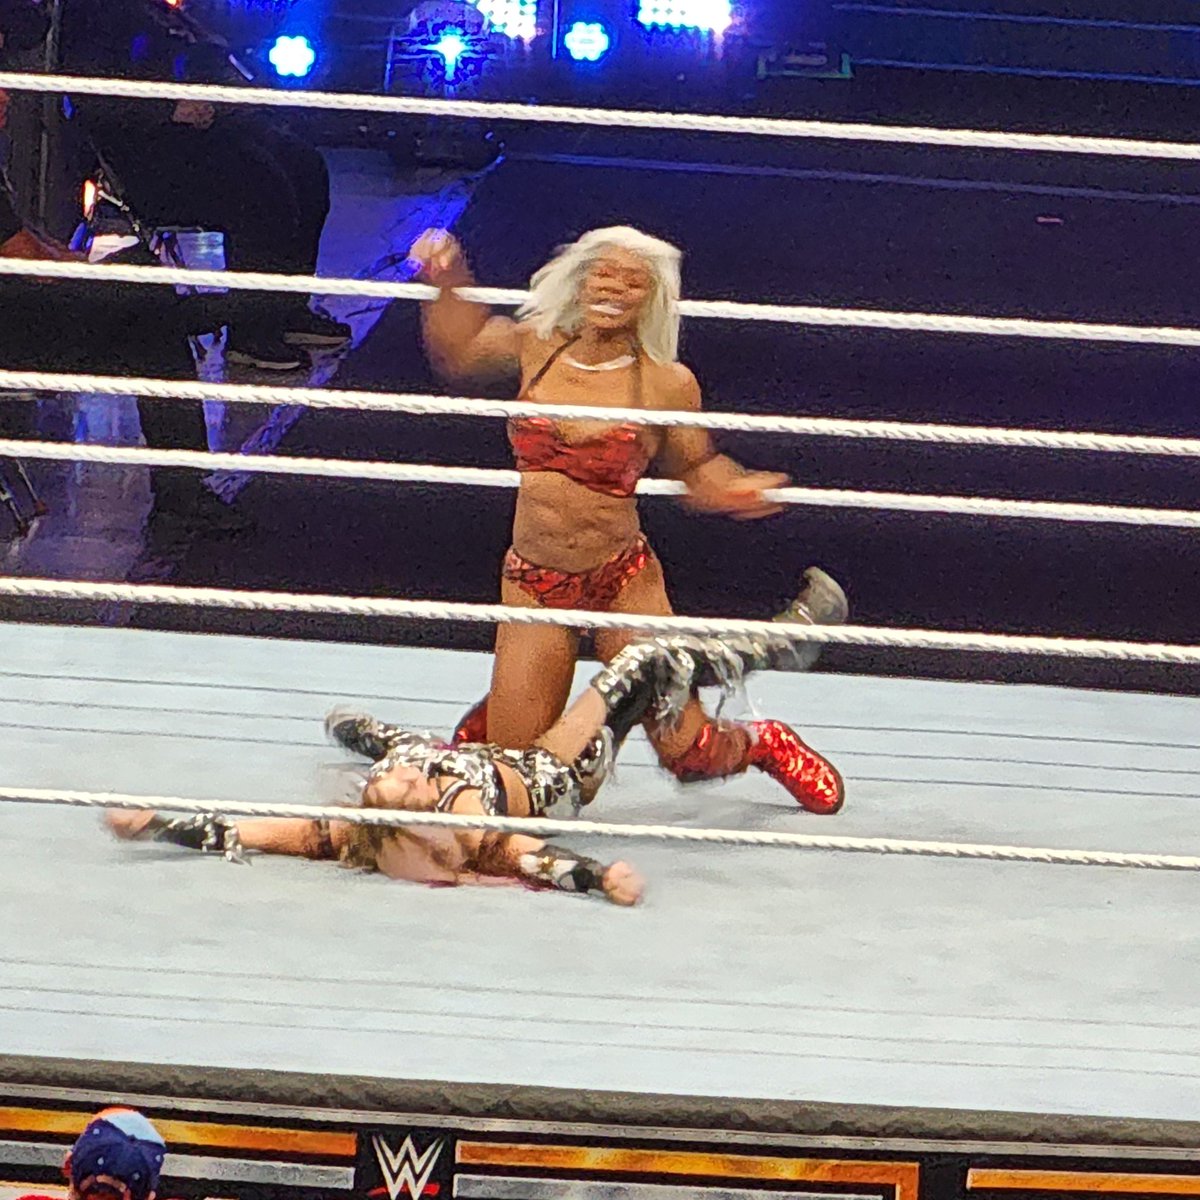 Jade taking charge
#SundayStunner #WWEFortWayne